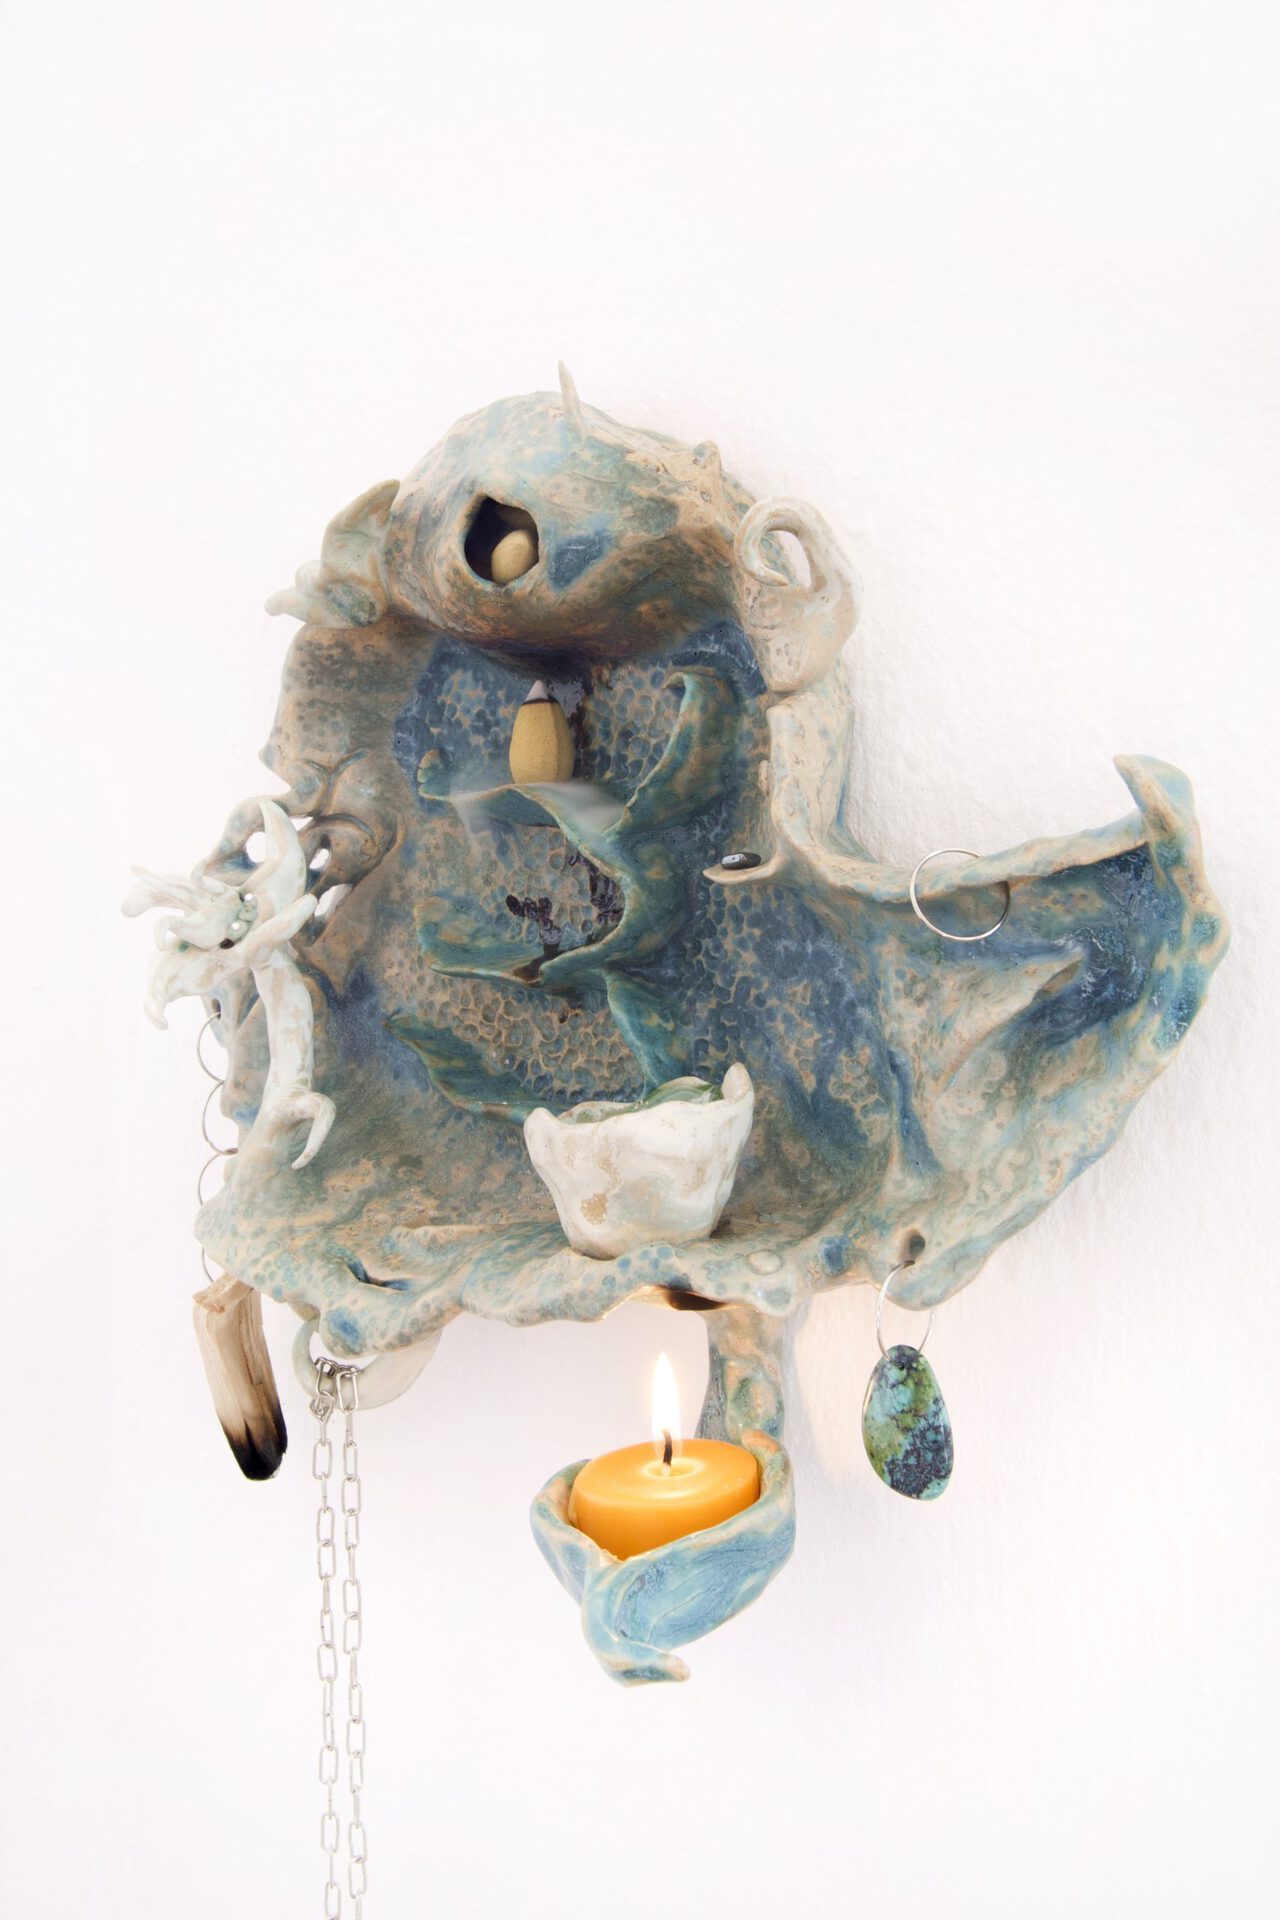 Maya Hottarek Facing a Young Padawan, detail 2021 Glazed ceramic, palo santo, essential oils, beeswax, chrysocolla, metal, lighter, water